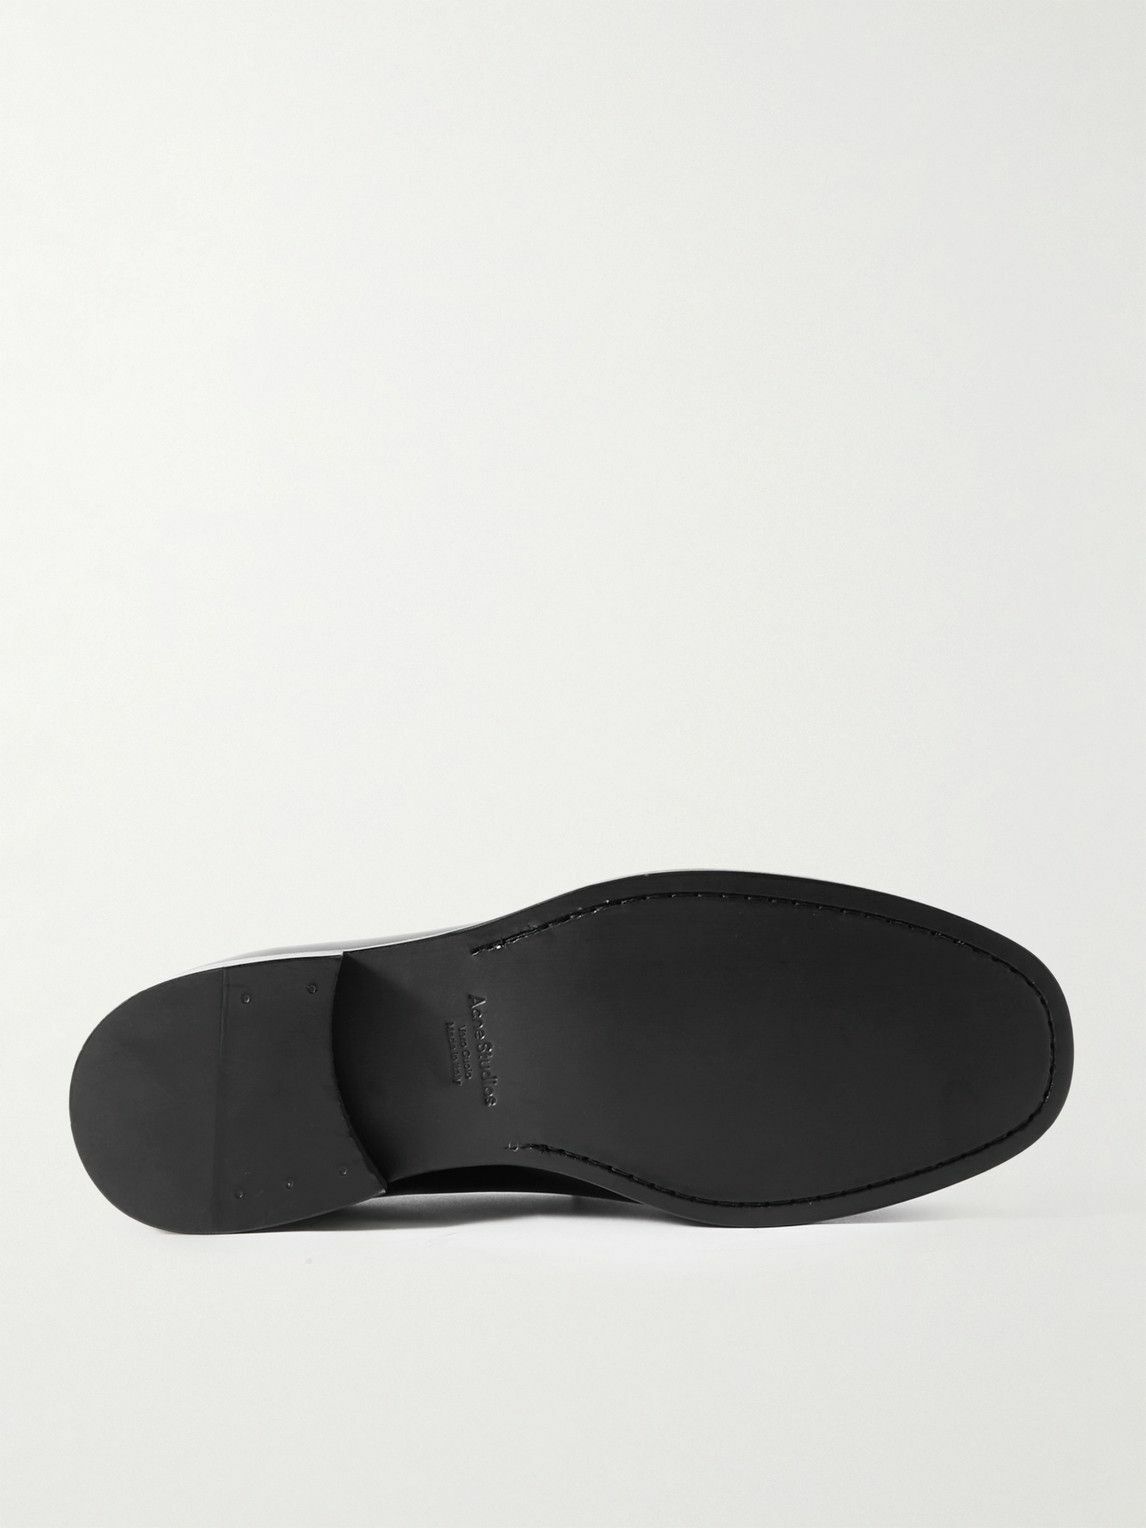 Acne Studios - Leather Loafers - Black Acne Studios